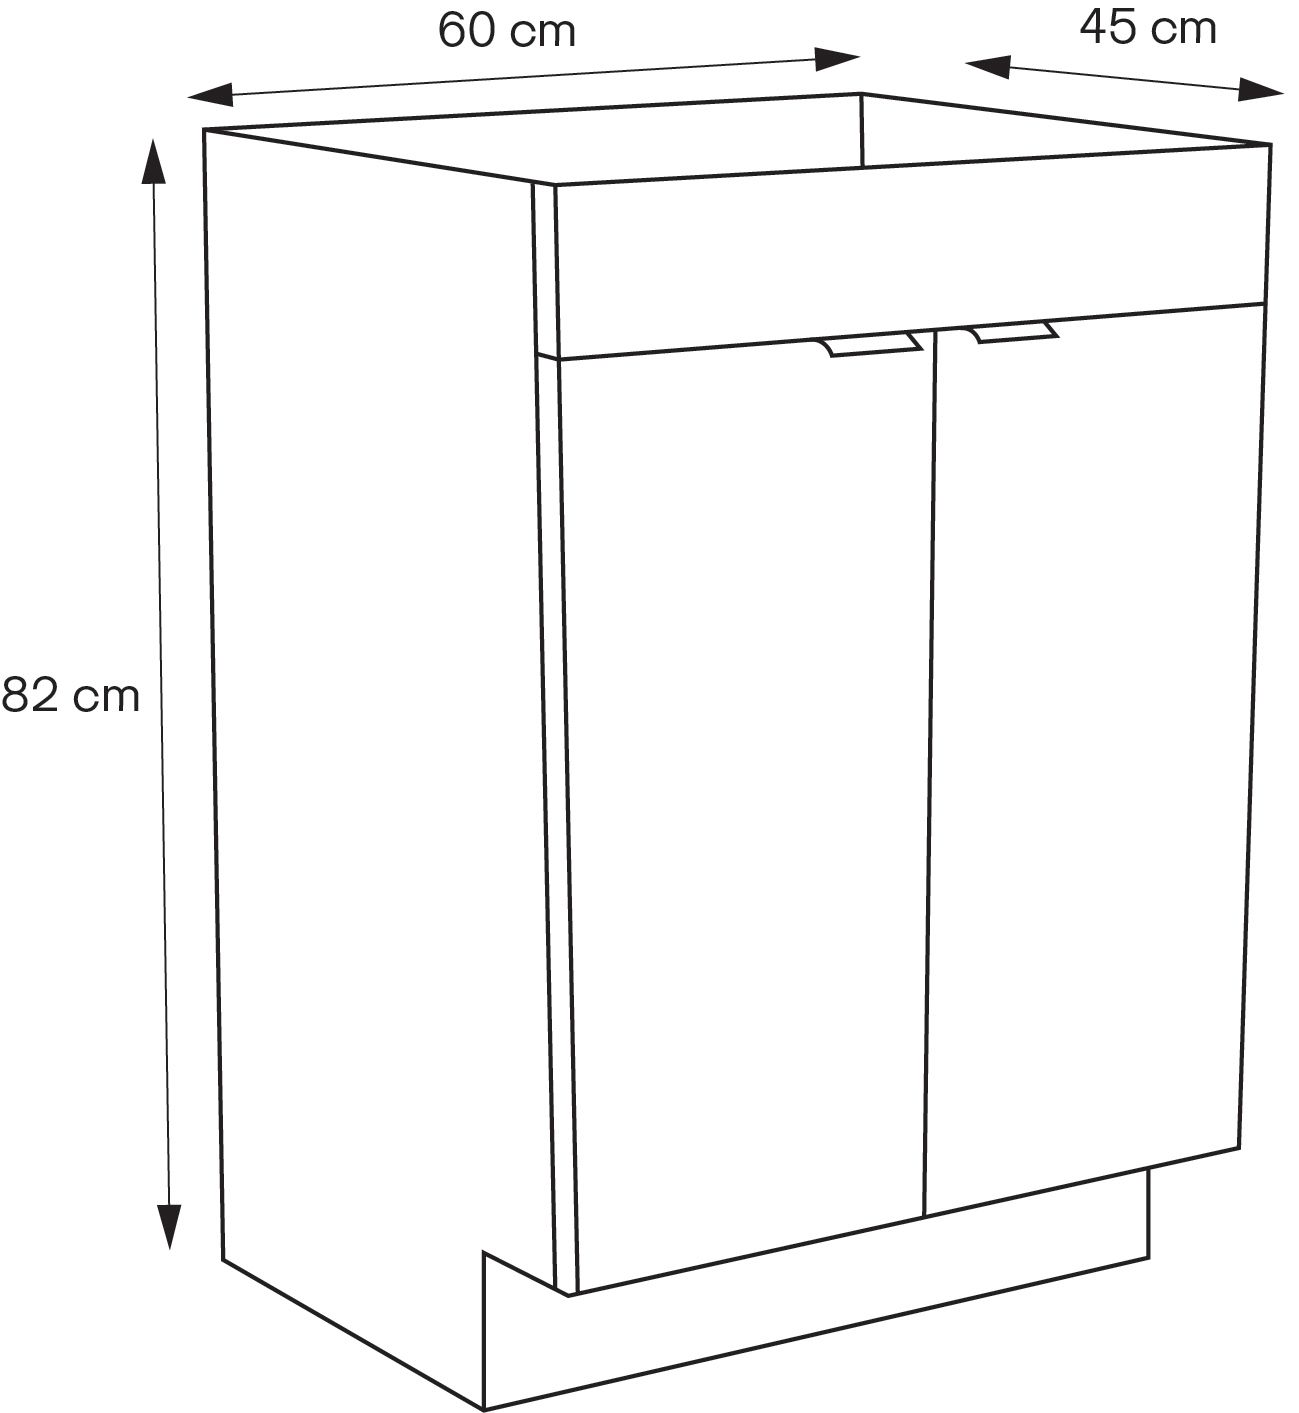 GoodHome Imandra Gloss Grey Double Bathroom Cabinet (H) 820mm (W) 600mm